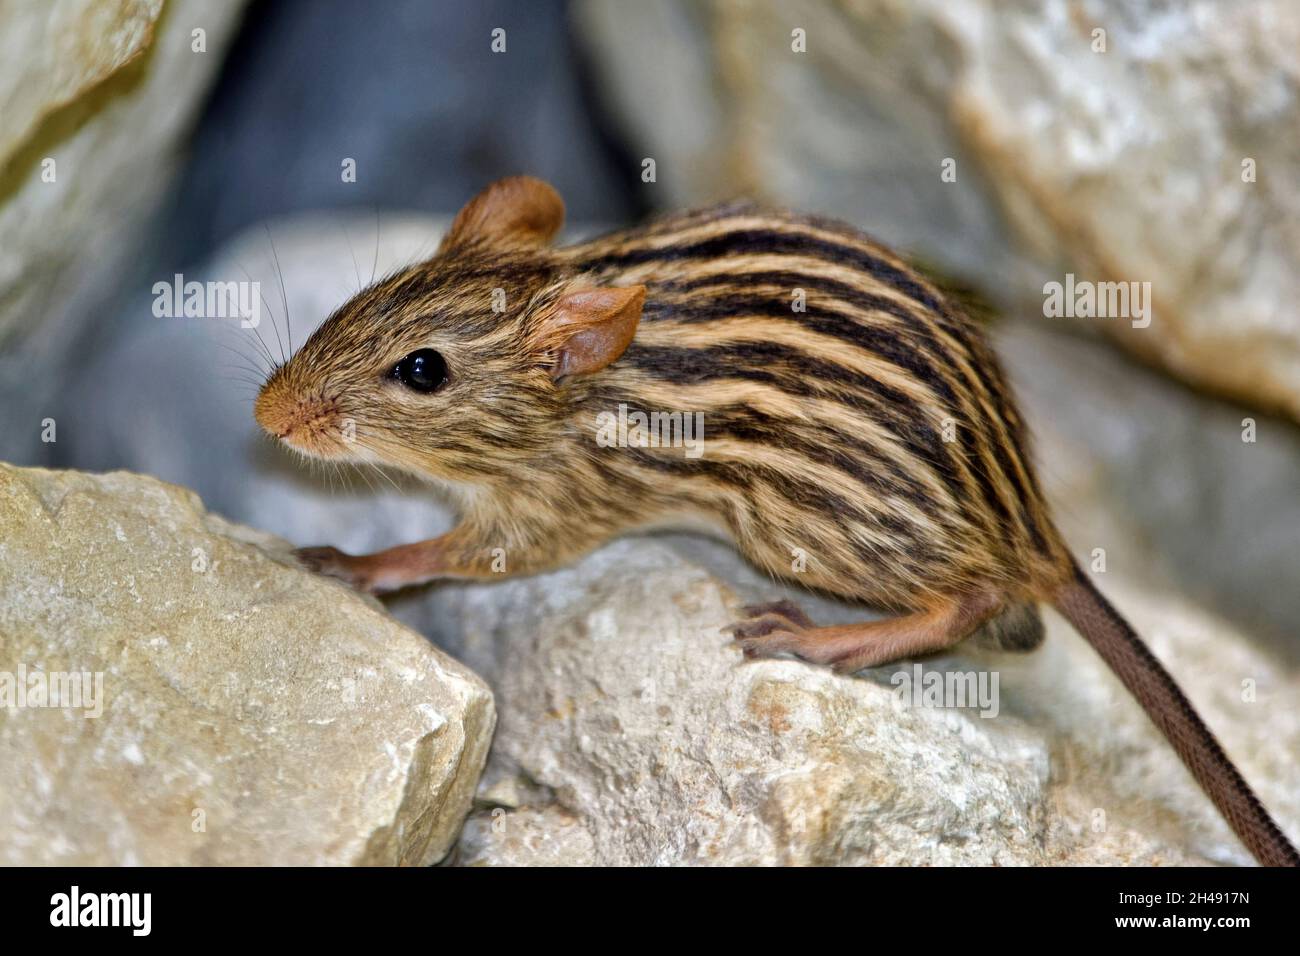 Barbary striped grass mouse - Lemniscomys barbarus Stock Photo